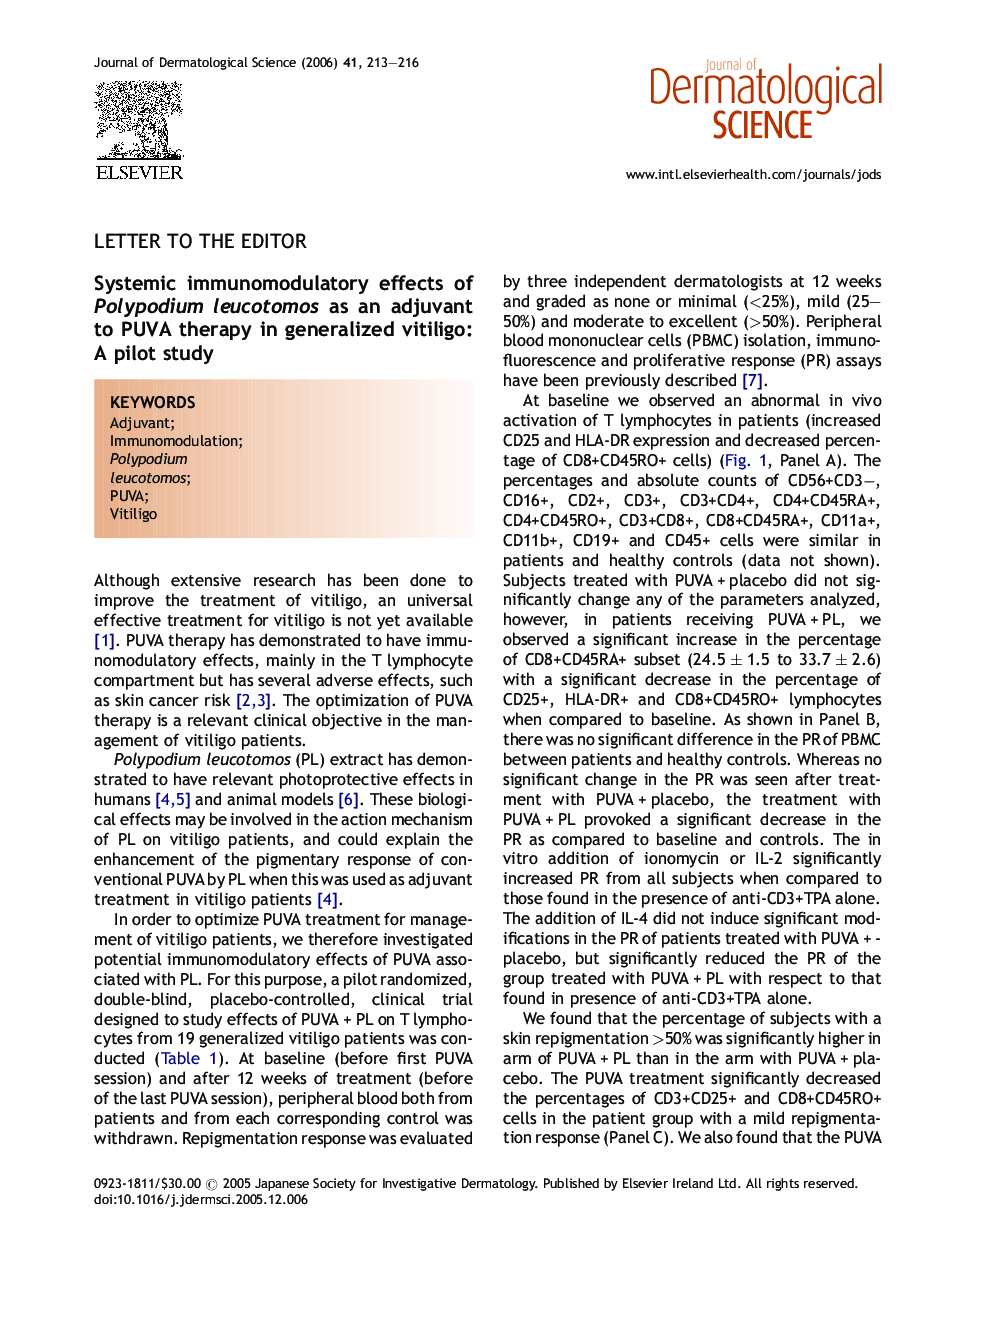 Systemic immunomodulatory effects of Polypodium leucotomos as an adjuvant to PUVA therapy in generalized vitiligo: A pilot study